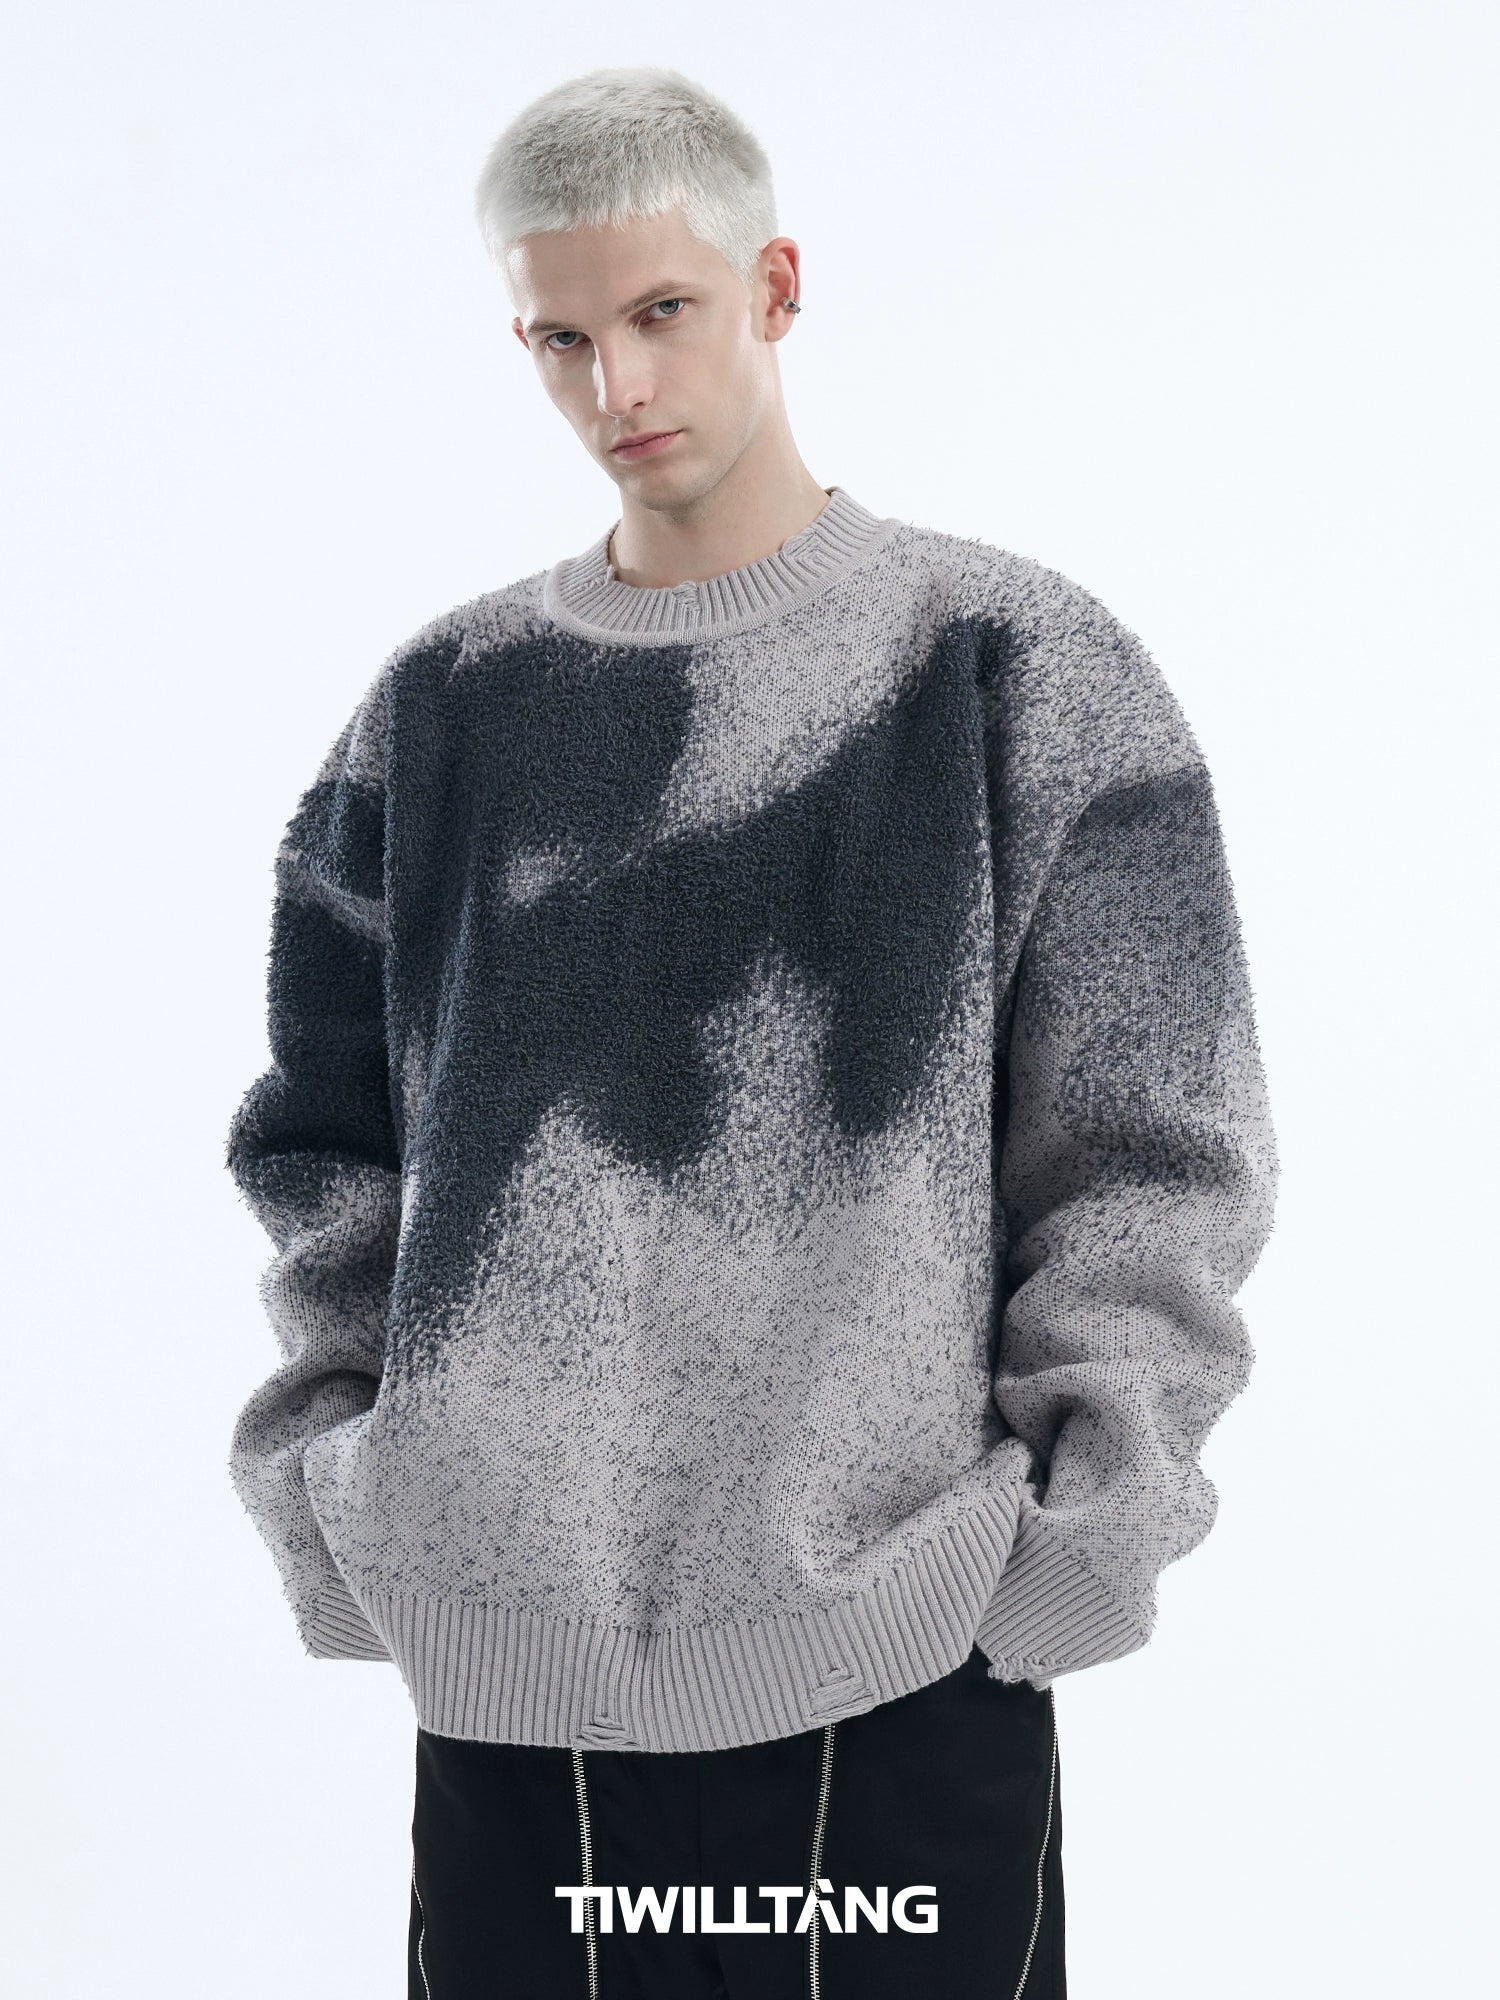 Paint Spray Distressed Sweater - chiclara